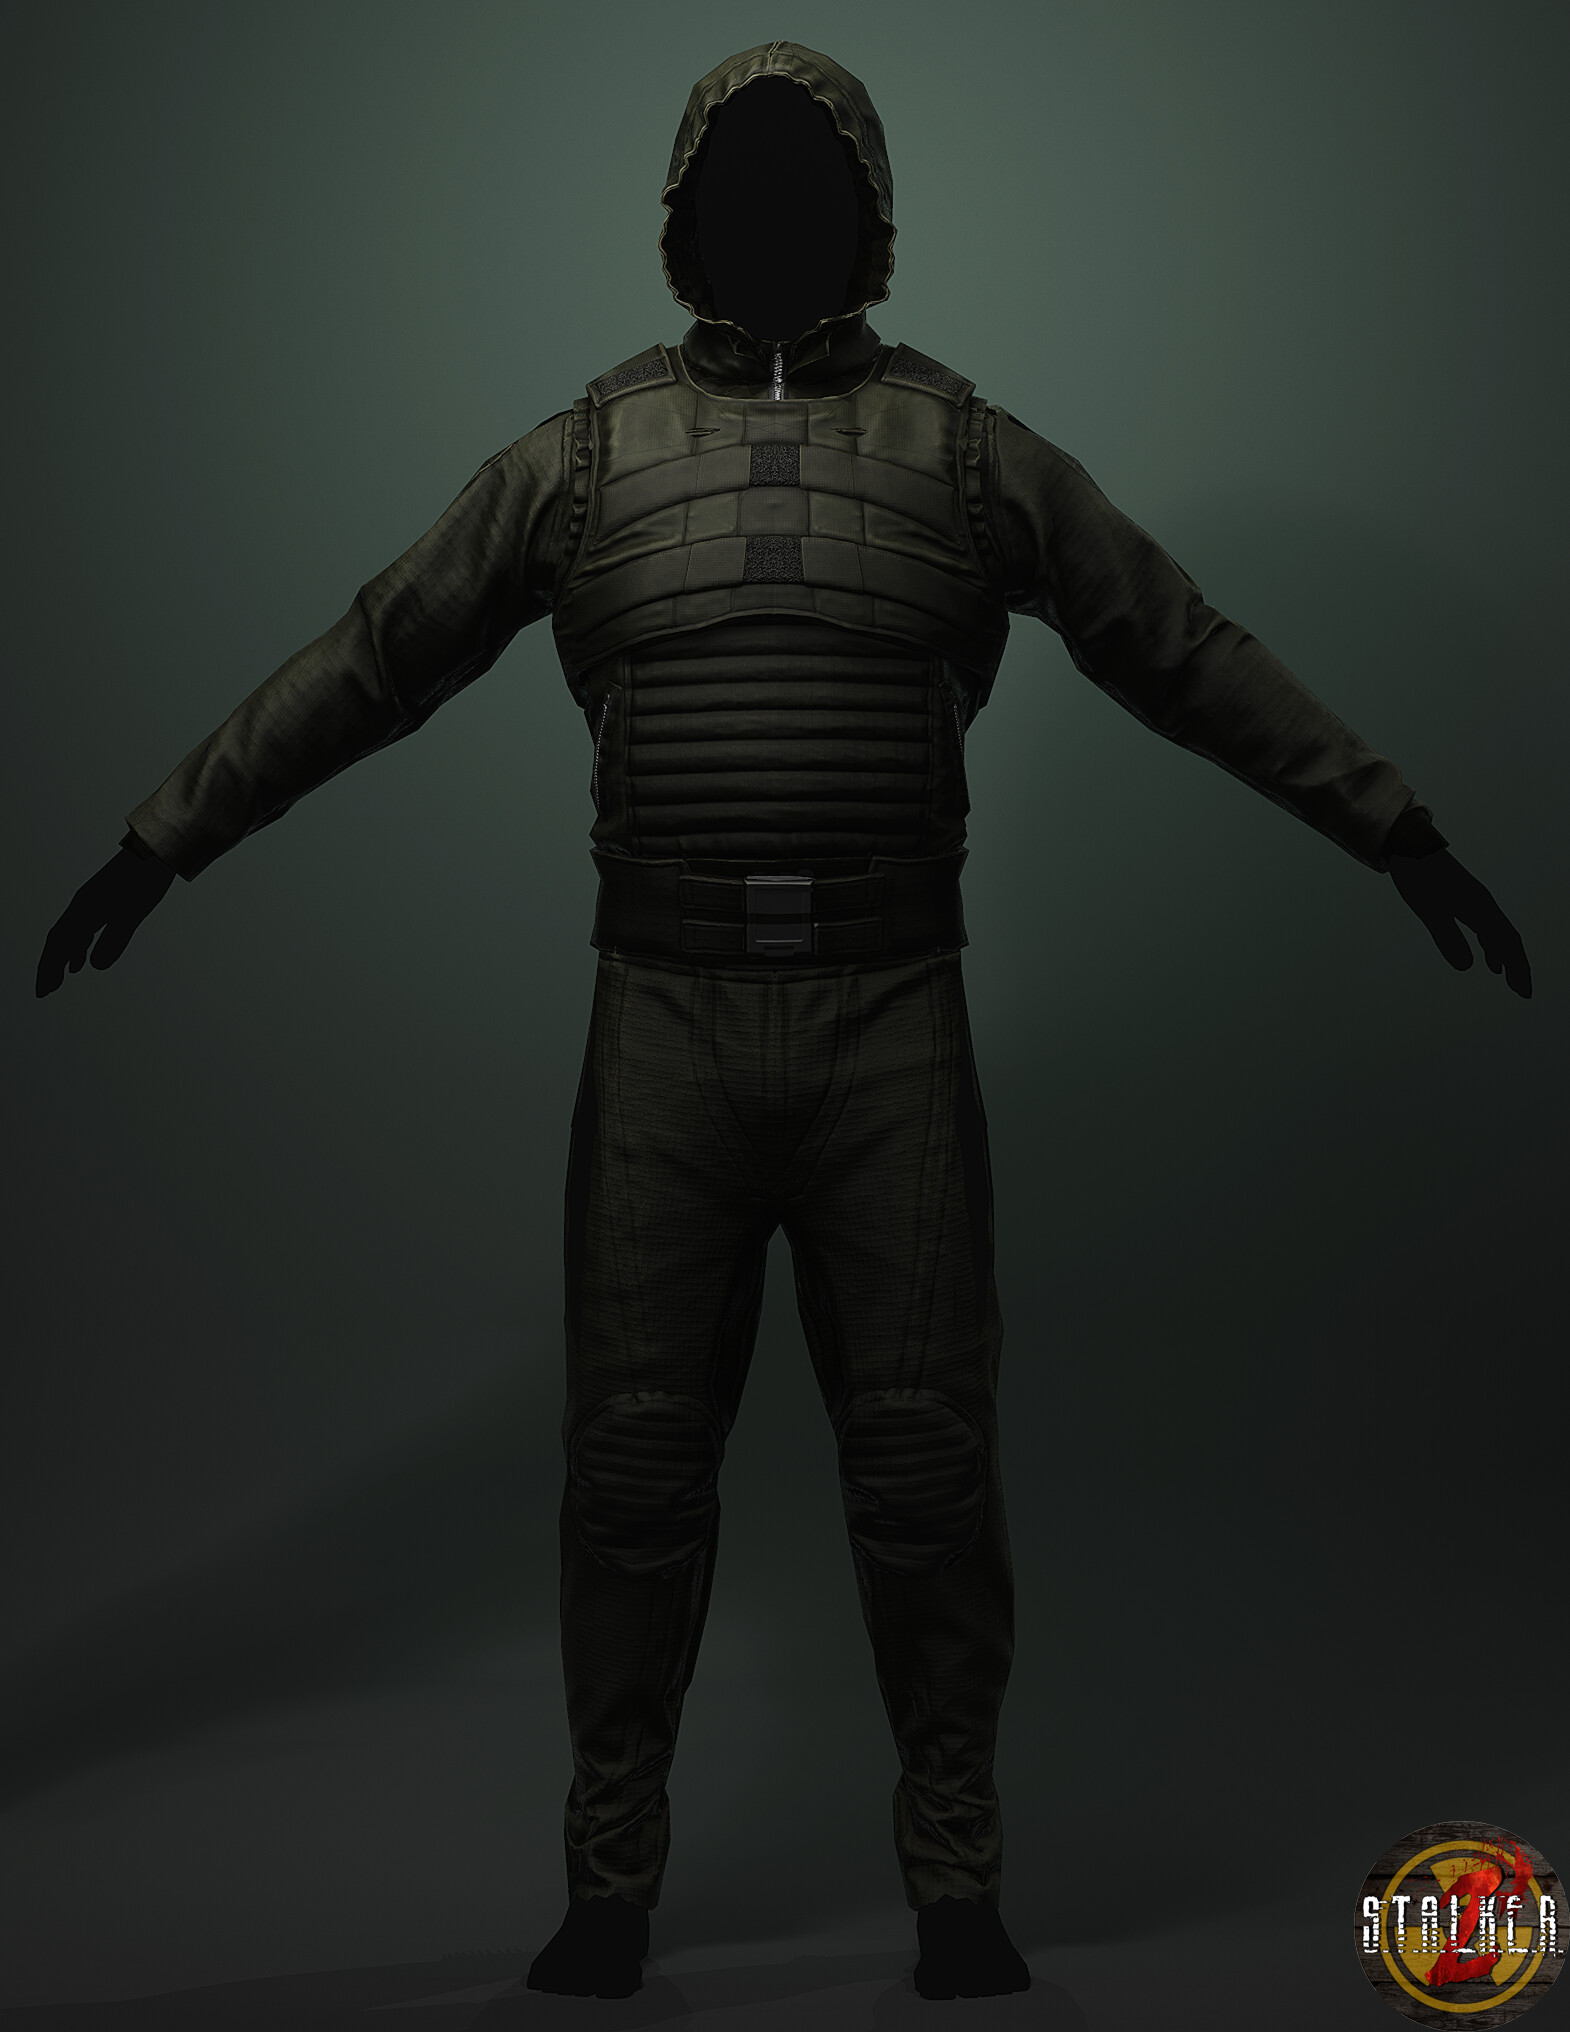 S.T.A.L.K.E.R. aiming for 2023? [Sunrise suit costume] : r/stalker